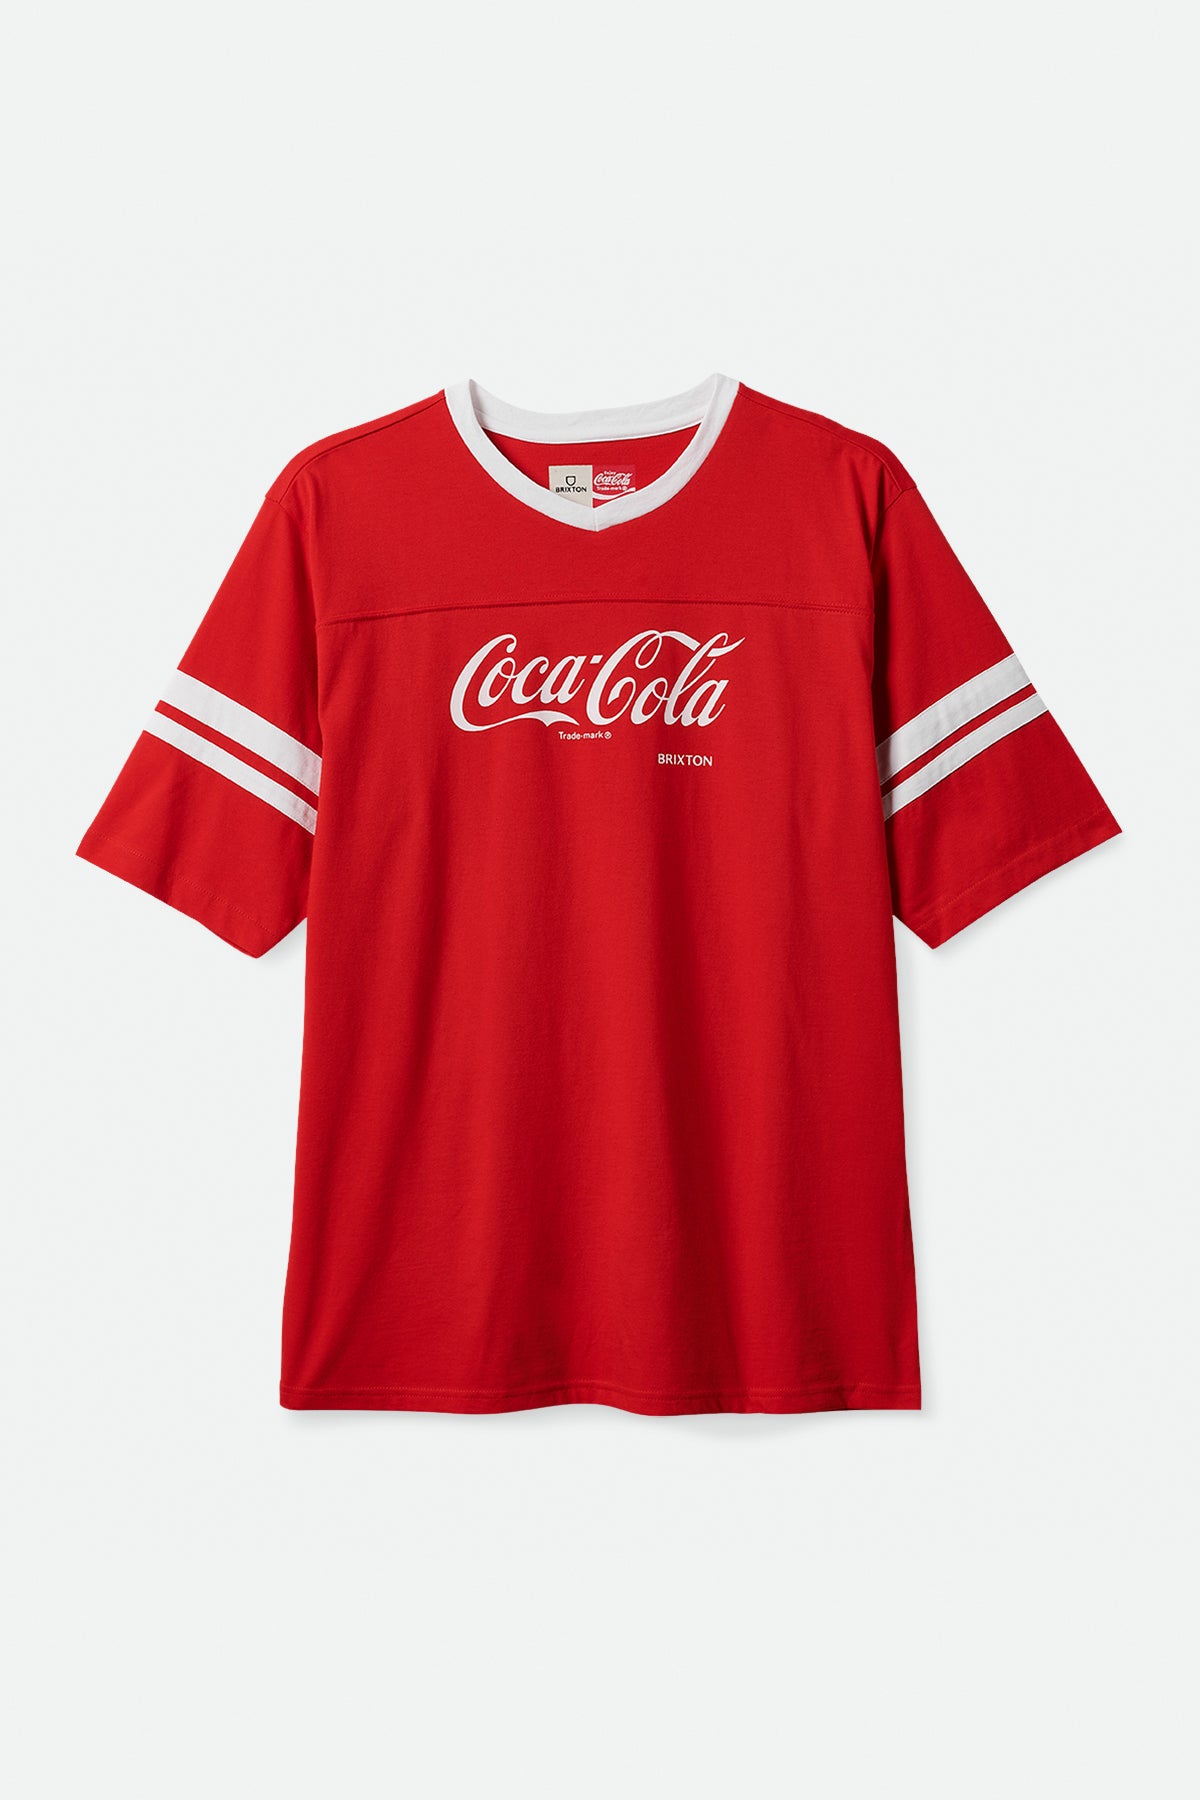 Coca-Cola Classic Football Tee